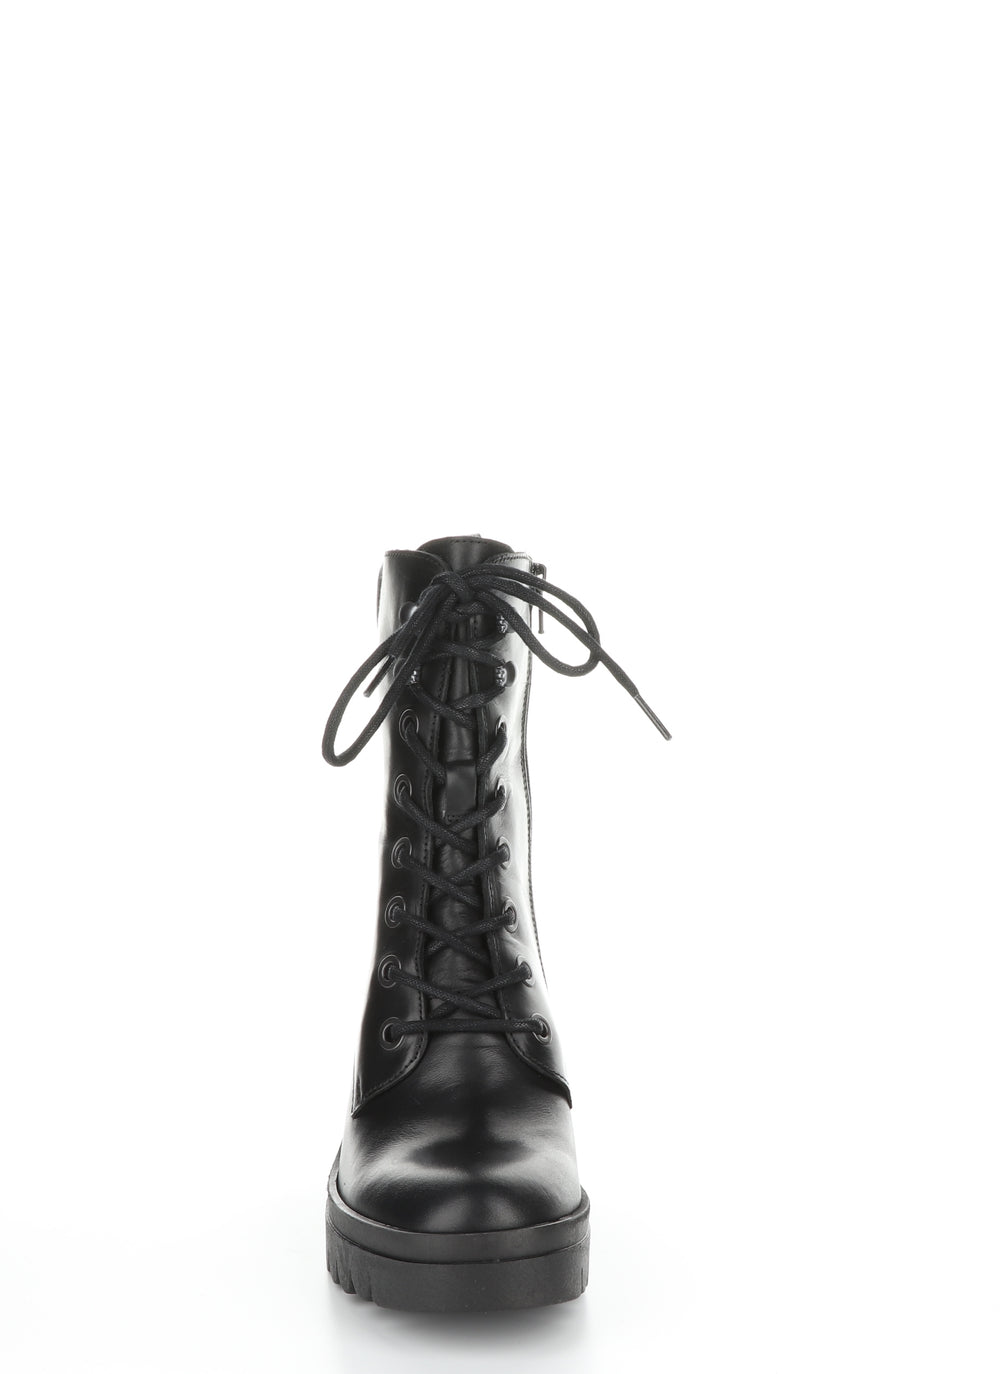 TIEL642FLY Black Zip Up Boots|TIEL642FLY Bottes avec Fermeture Zippée in Noir